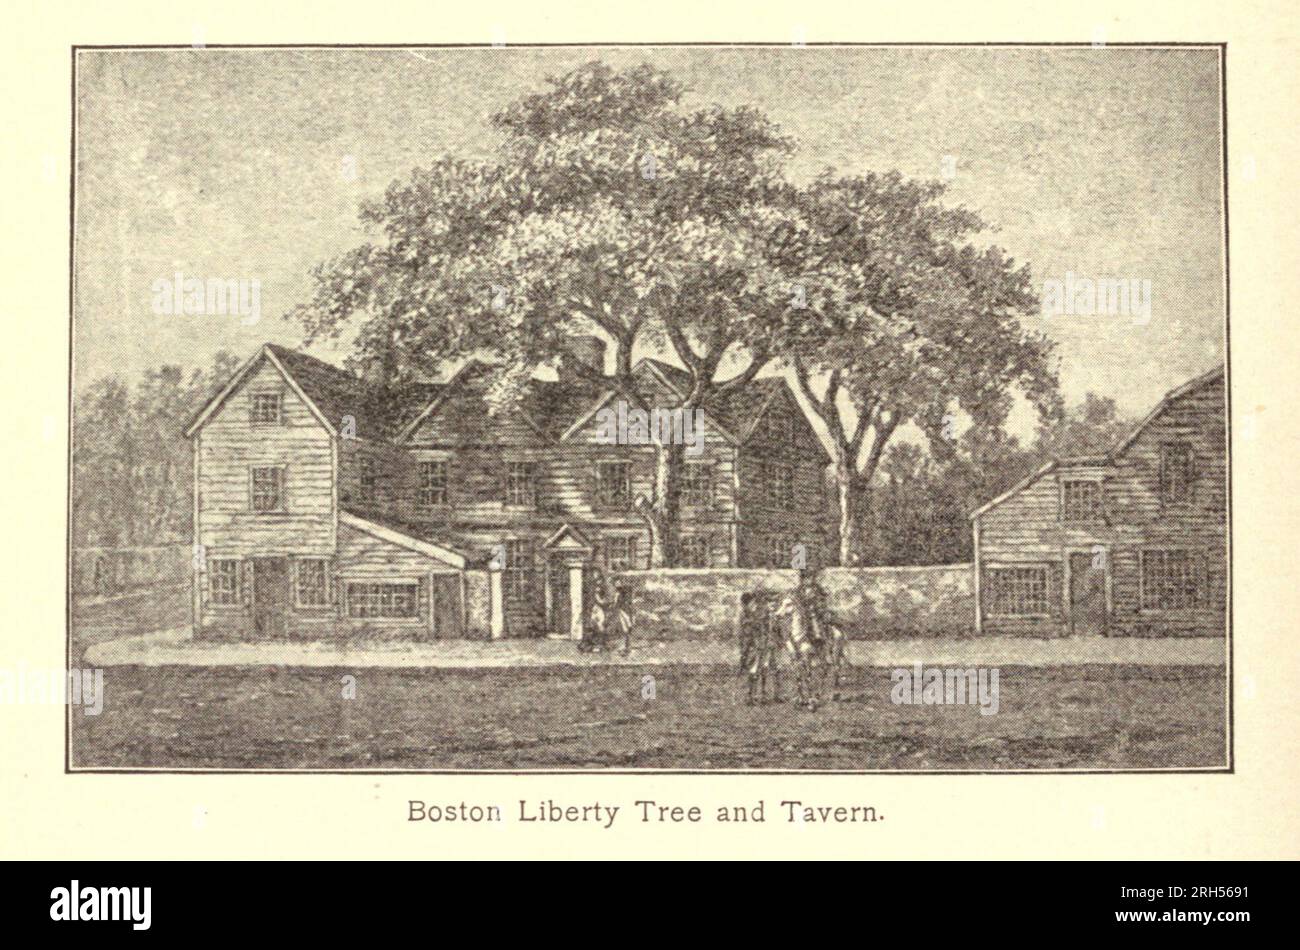 Boston Liberty Tree und Tavern. Aus dem Buch "Stage-Coach and Tavern Days" von Earle, Alice Morse, 1851-1911 The Macmillan Company 1901 Stockfoto